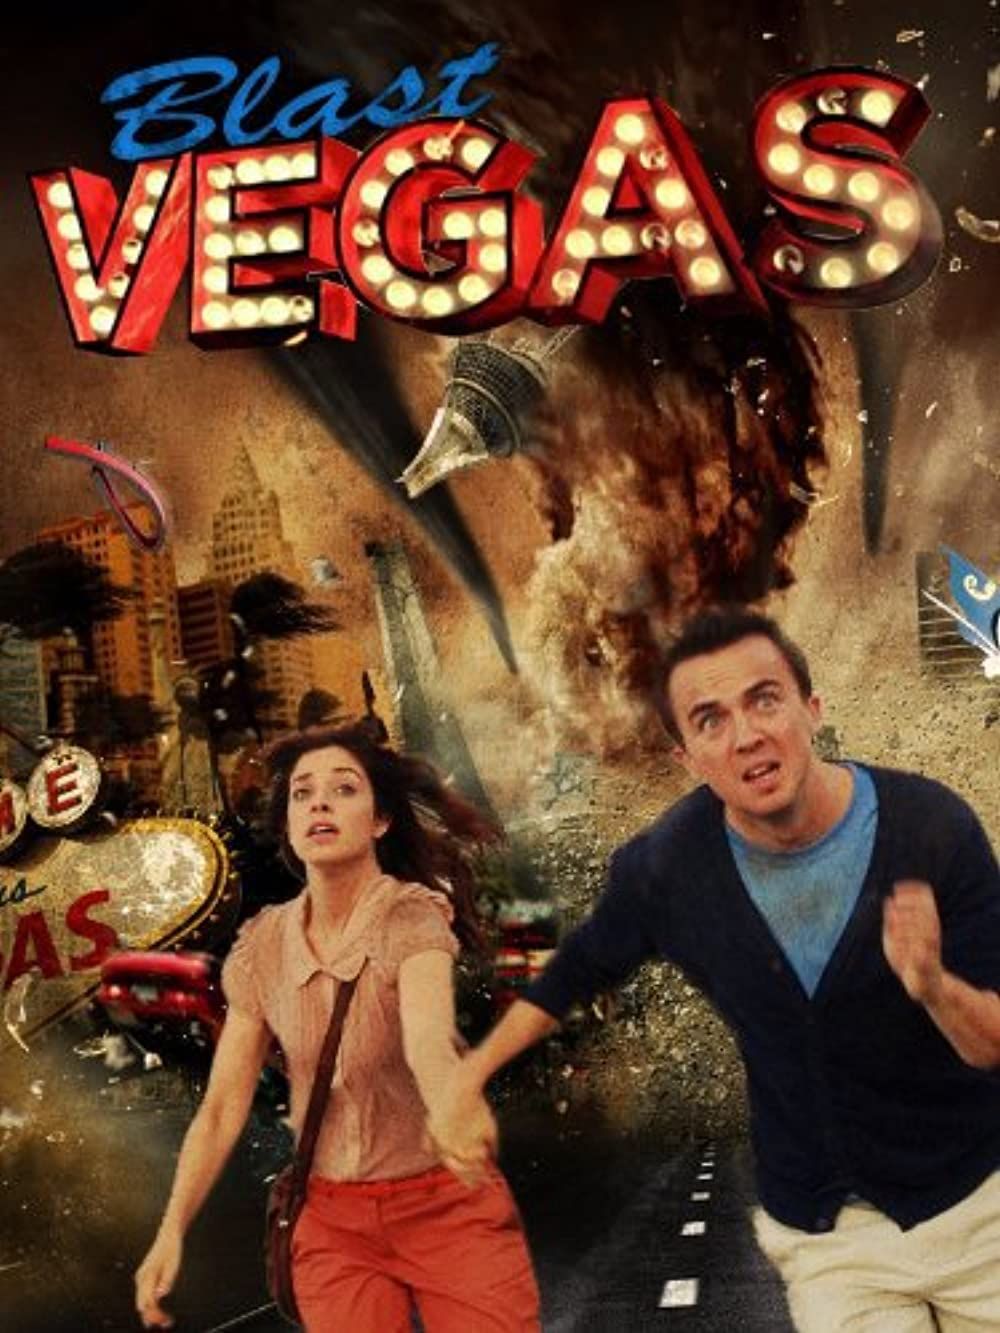 Destruction Las Vegas (2013) Hindi Dubbed HDRip download full movie